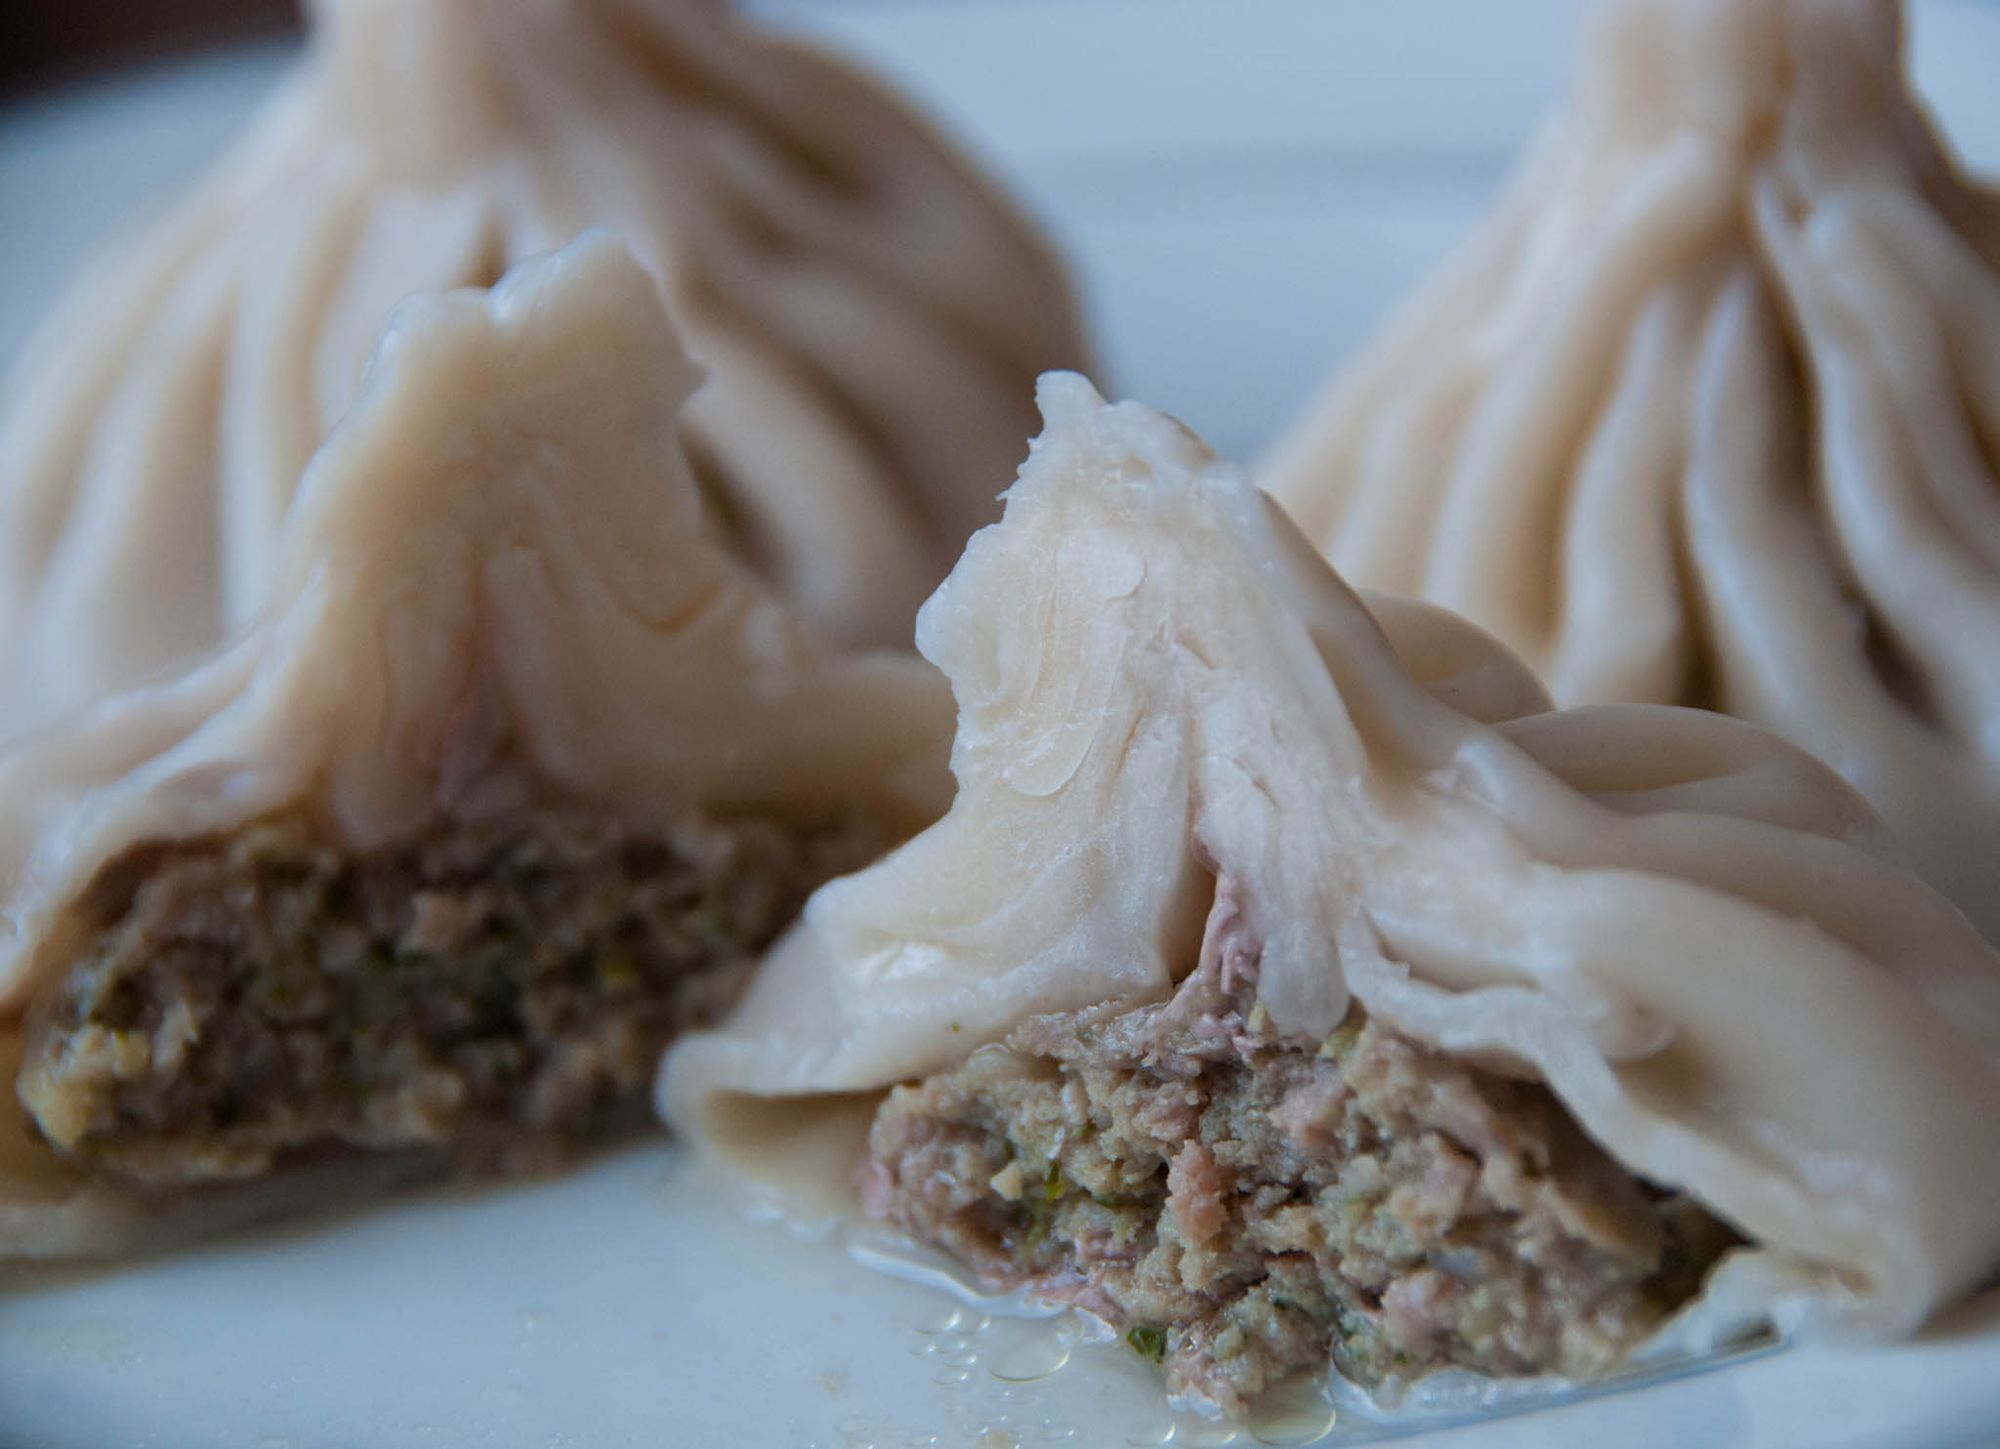 Sheepshead Bay Honored For Having Some Of NYC’s Best Dumplings